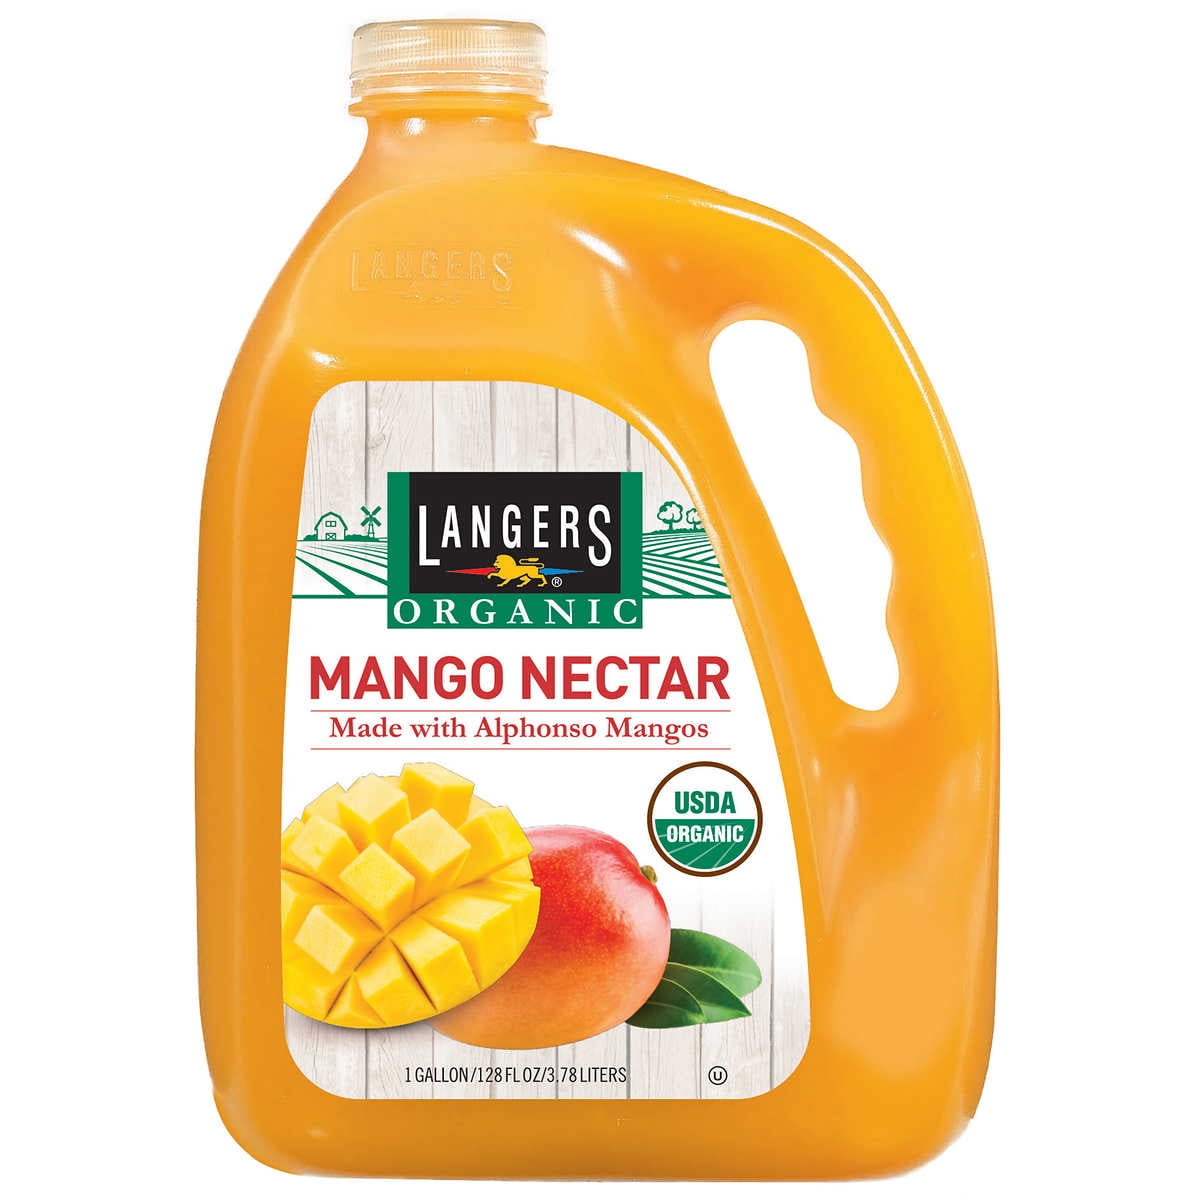 Langers Organic Mango Nectar Juice, 128 oz - Walmart.com - Walmart.com